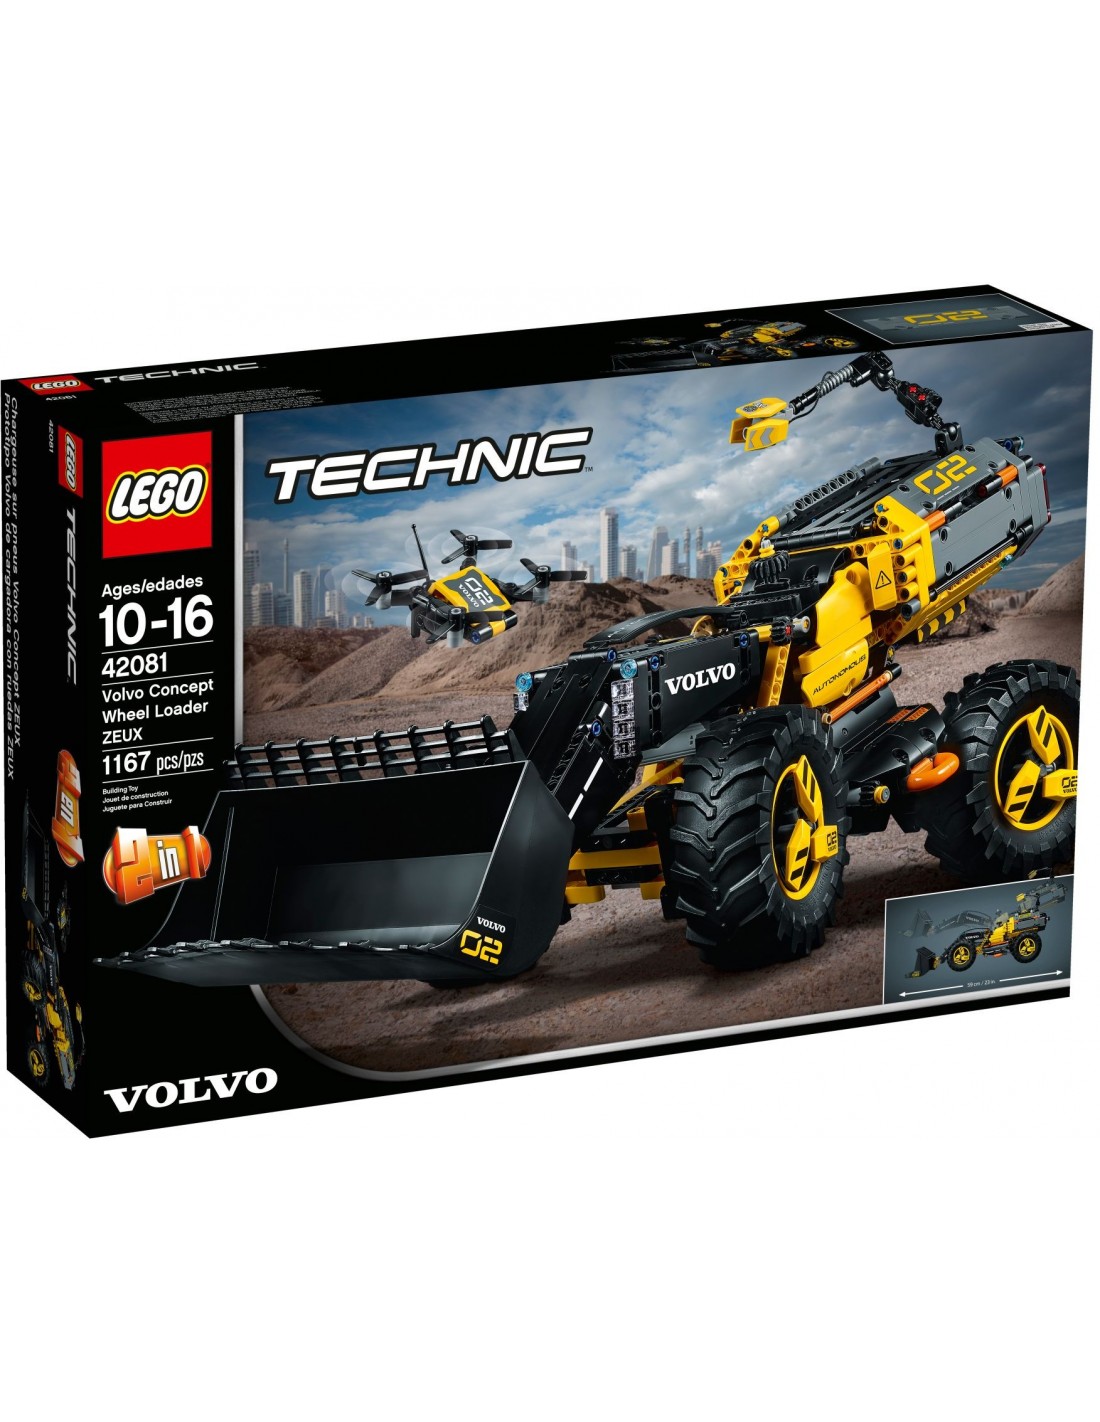 LEGO Technic - Le tractopelle Volvo Concept ZEUX - 42081 - En stock chez